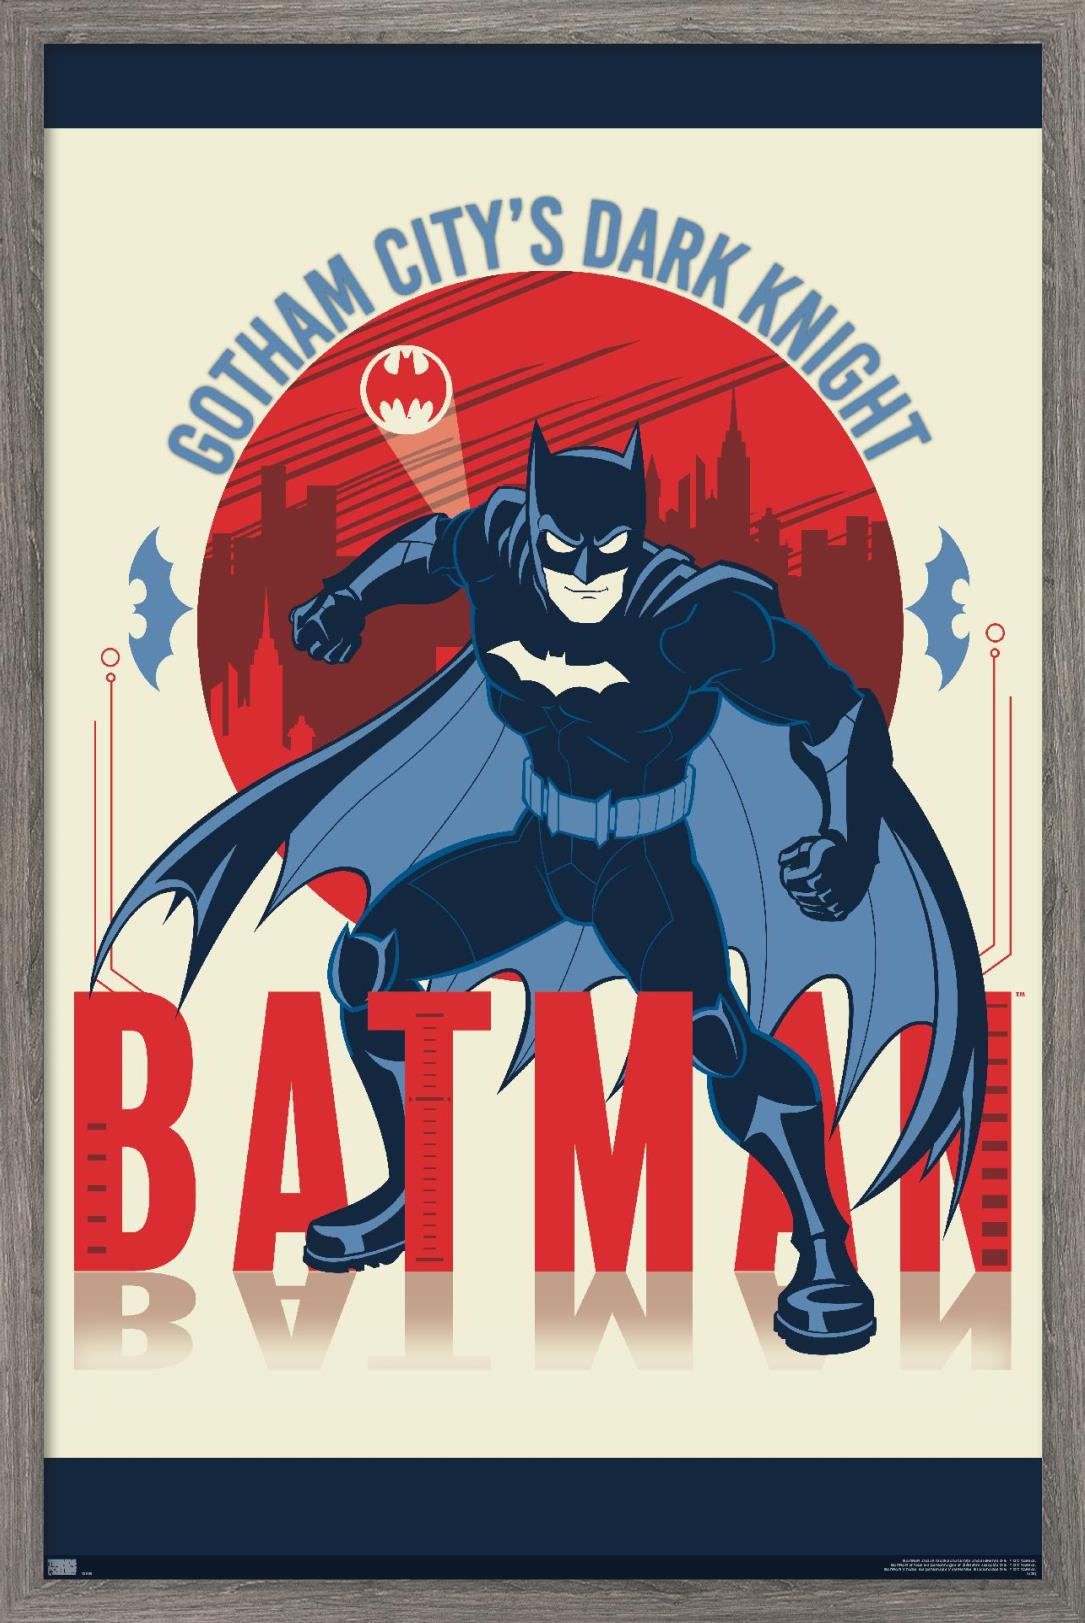 DC Comics Batman - Gotham City's Dark Knight Wall Poster, 